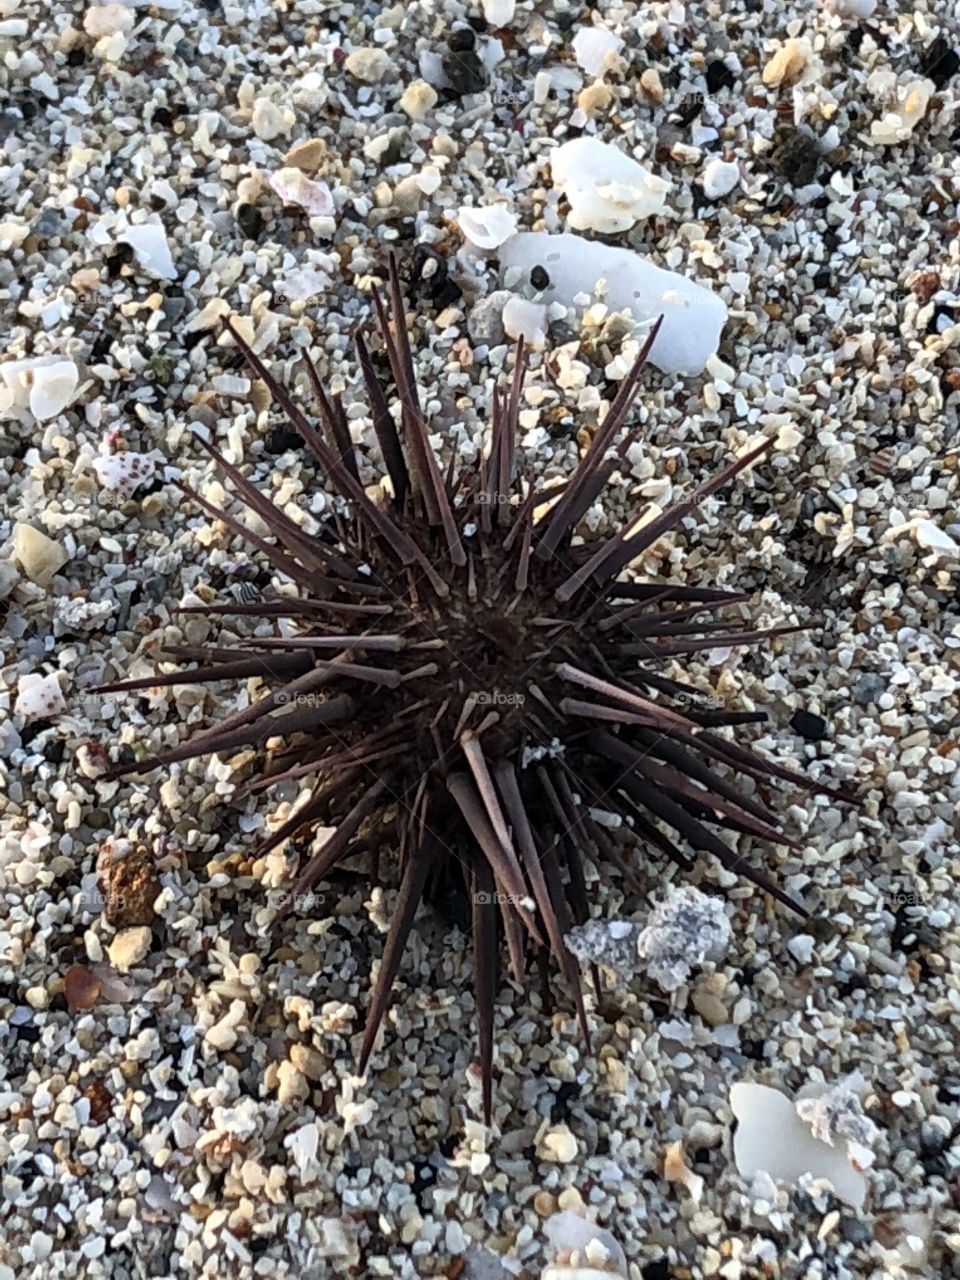 Sea Urchin! Watch out 😳